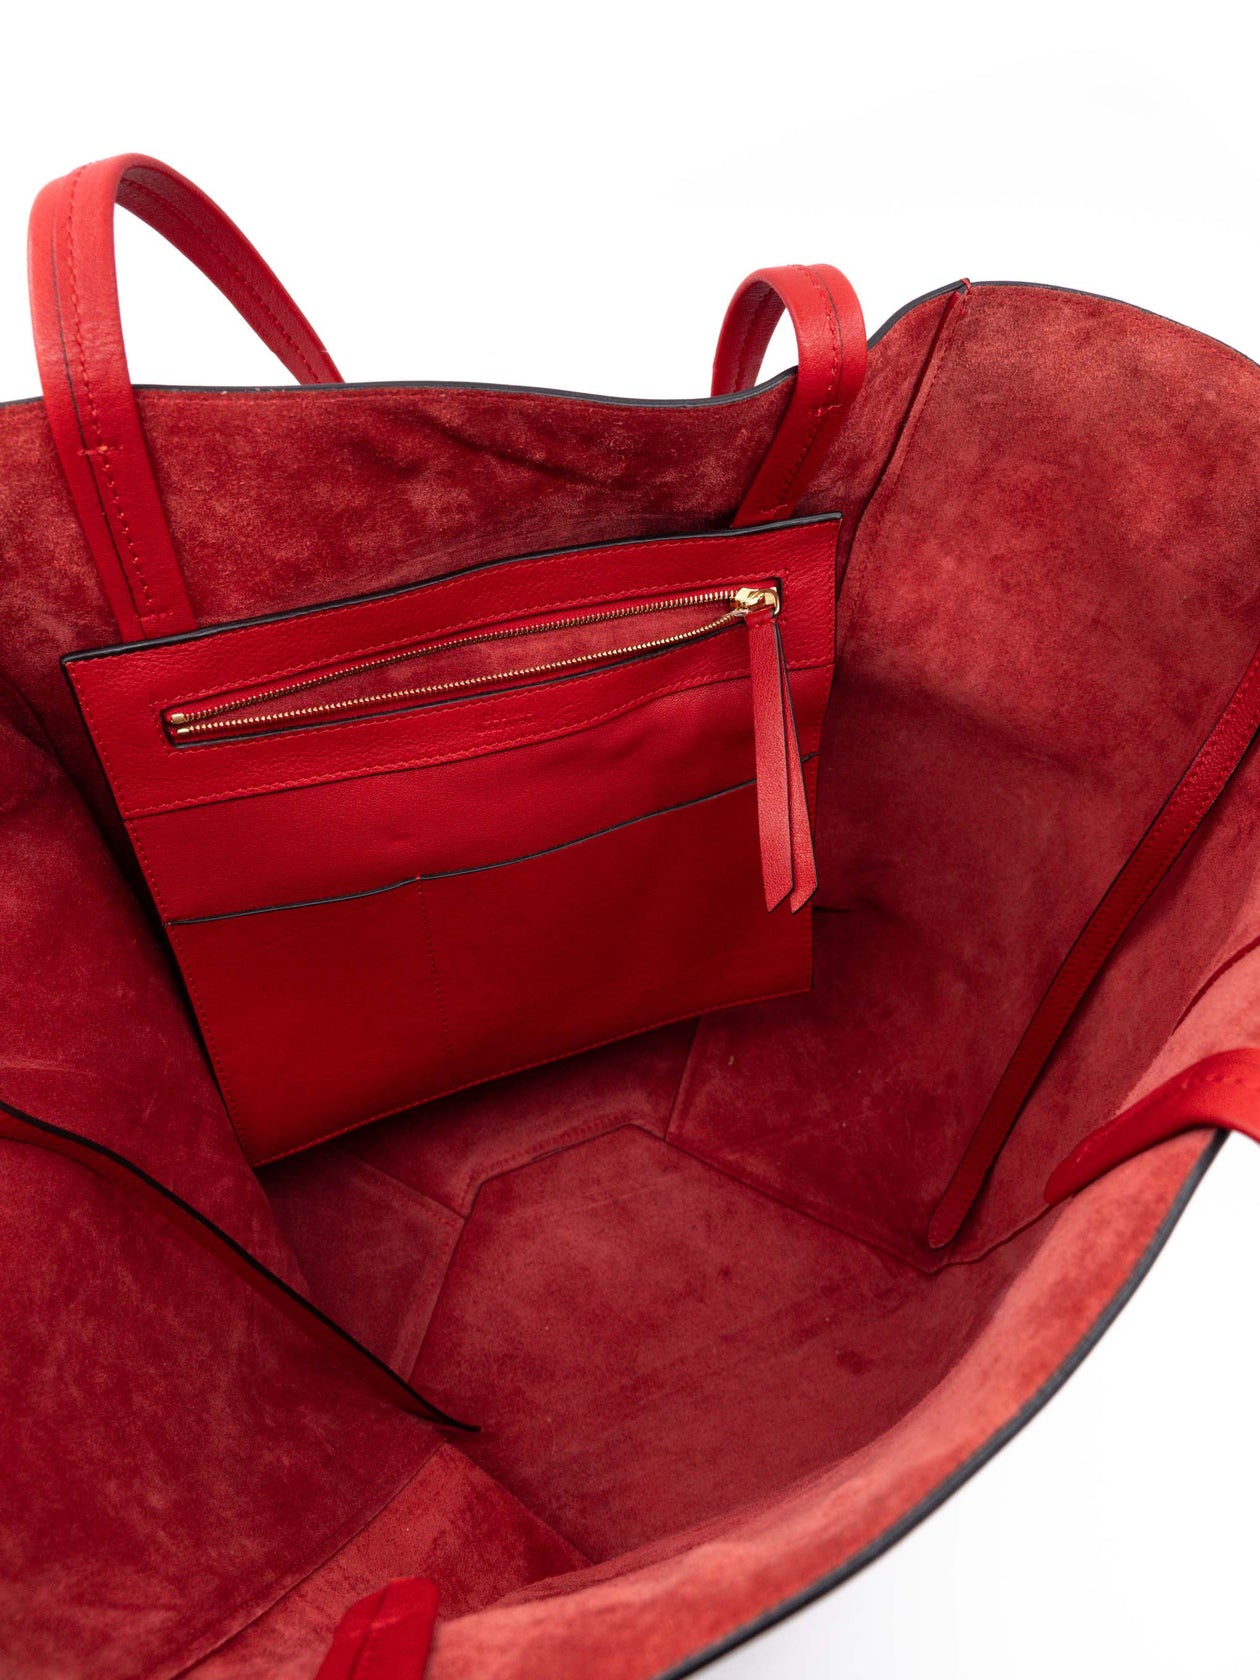 Phoebe Philo's Most Iconic Handbags - The Vault